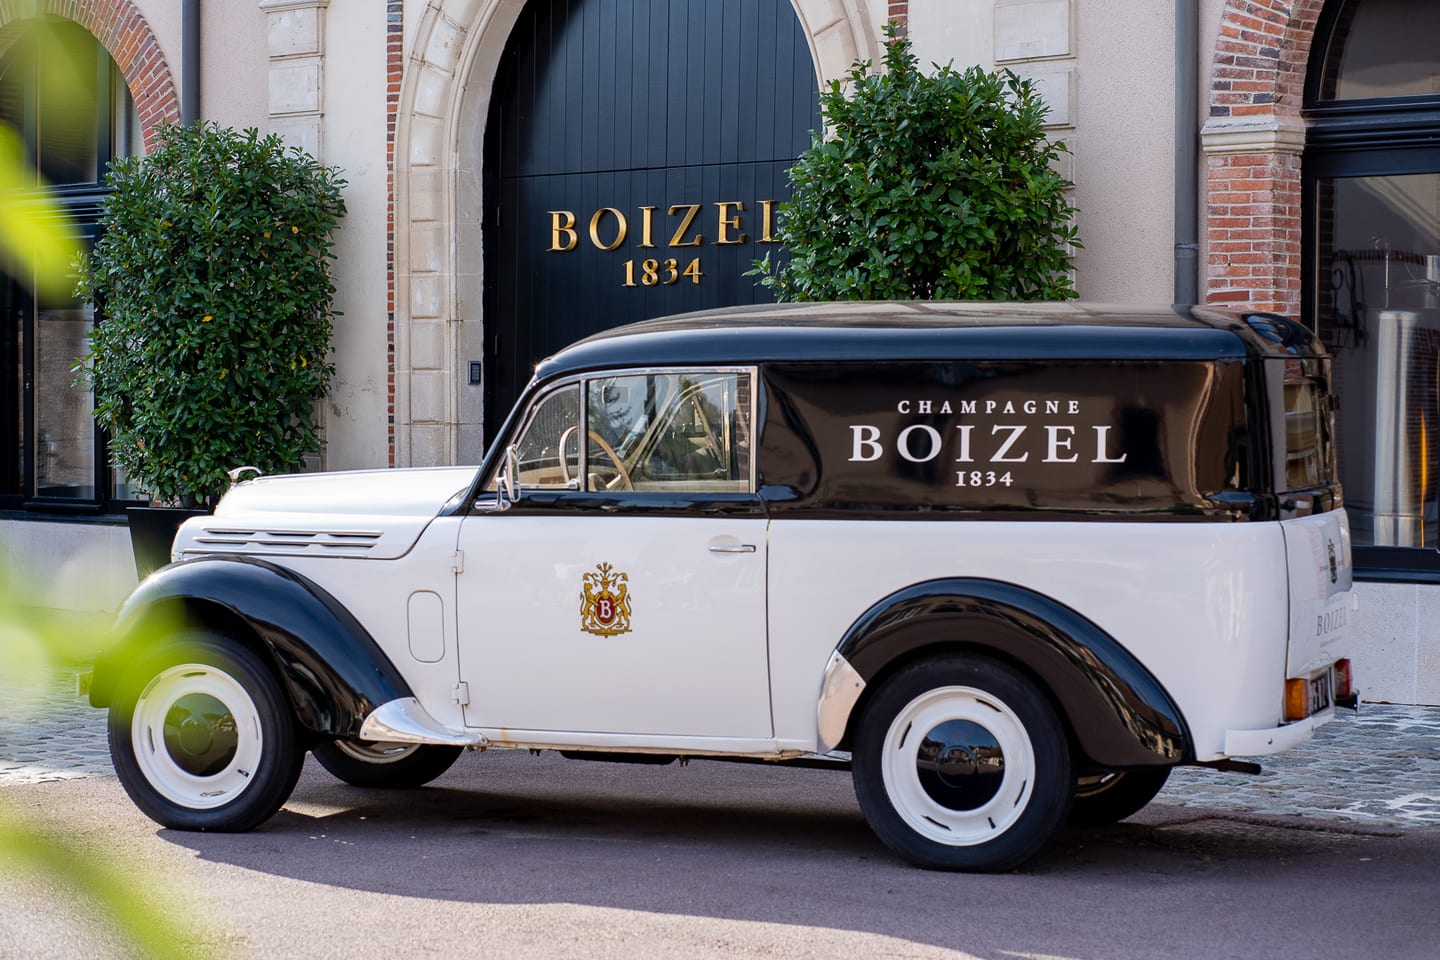 Visite Champagne Boizel Epernay